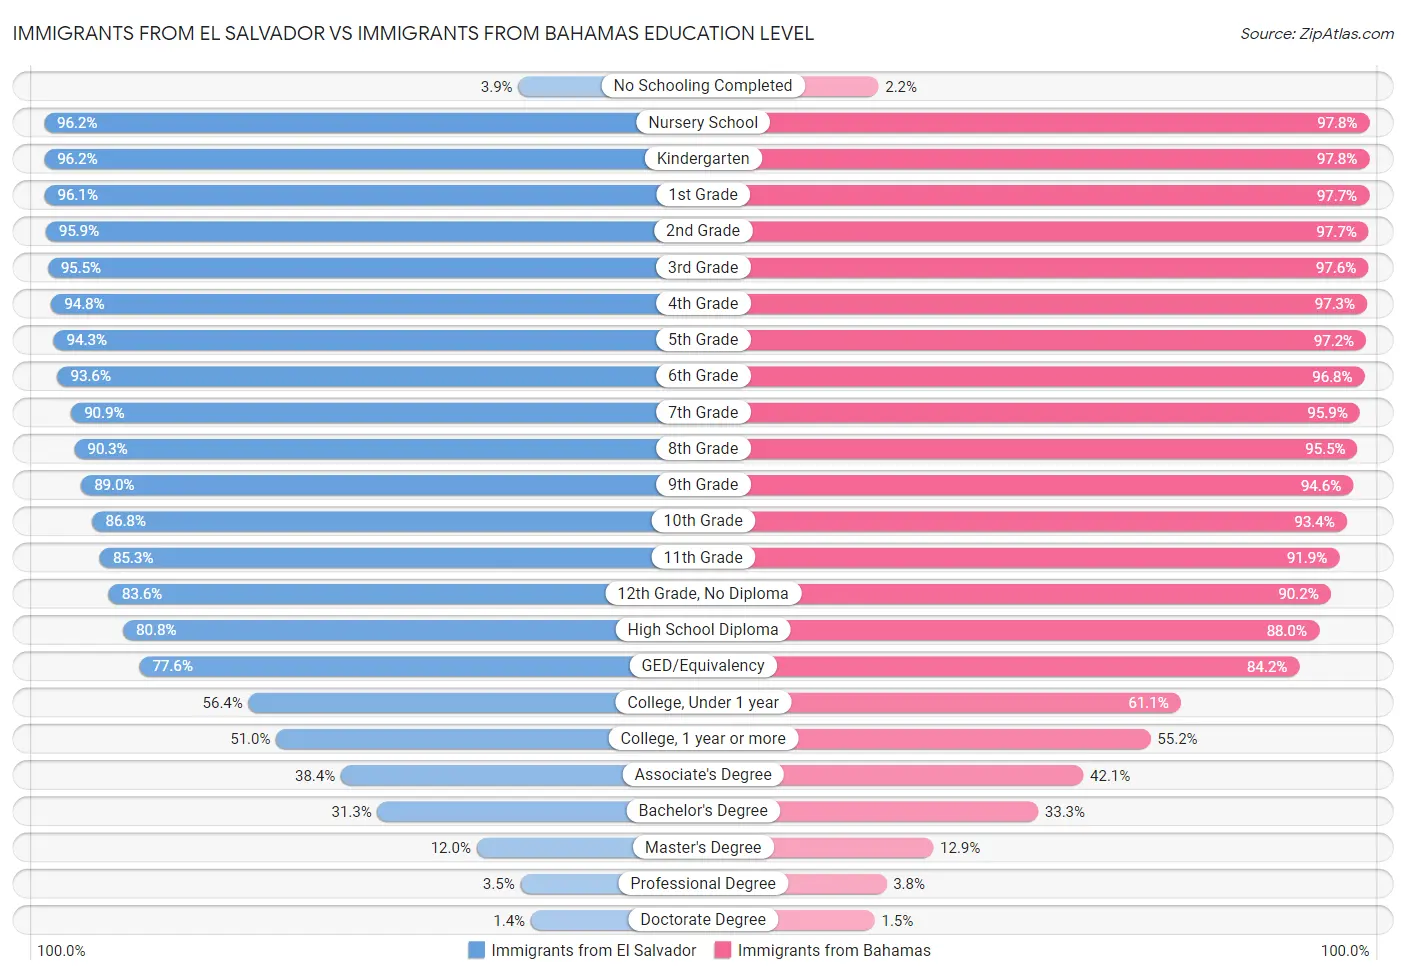 Immigrants from El Salvador vs Immigrants from Bahamas Education Level